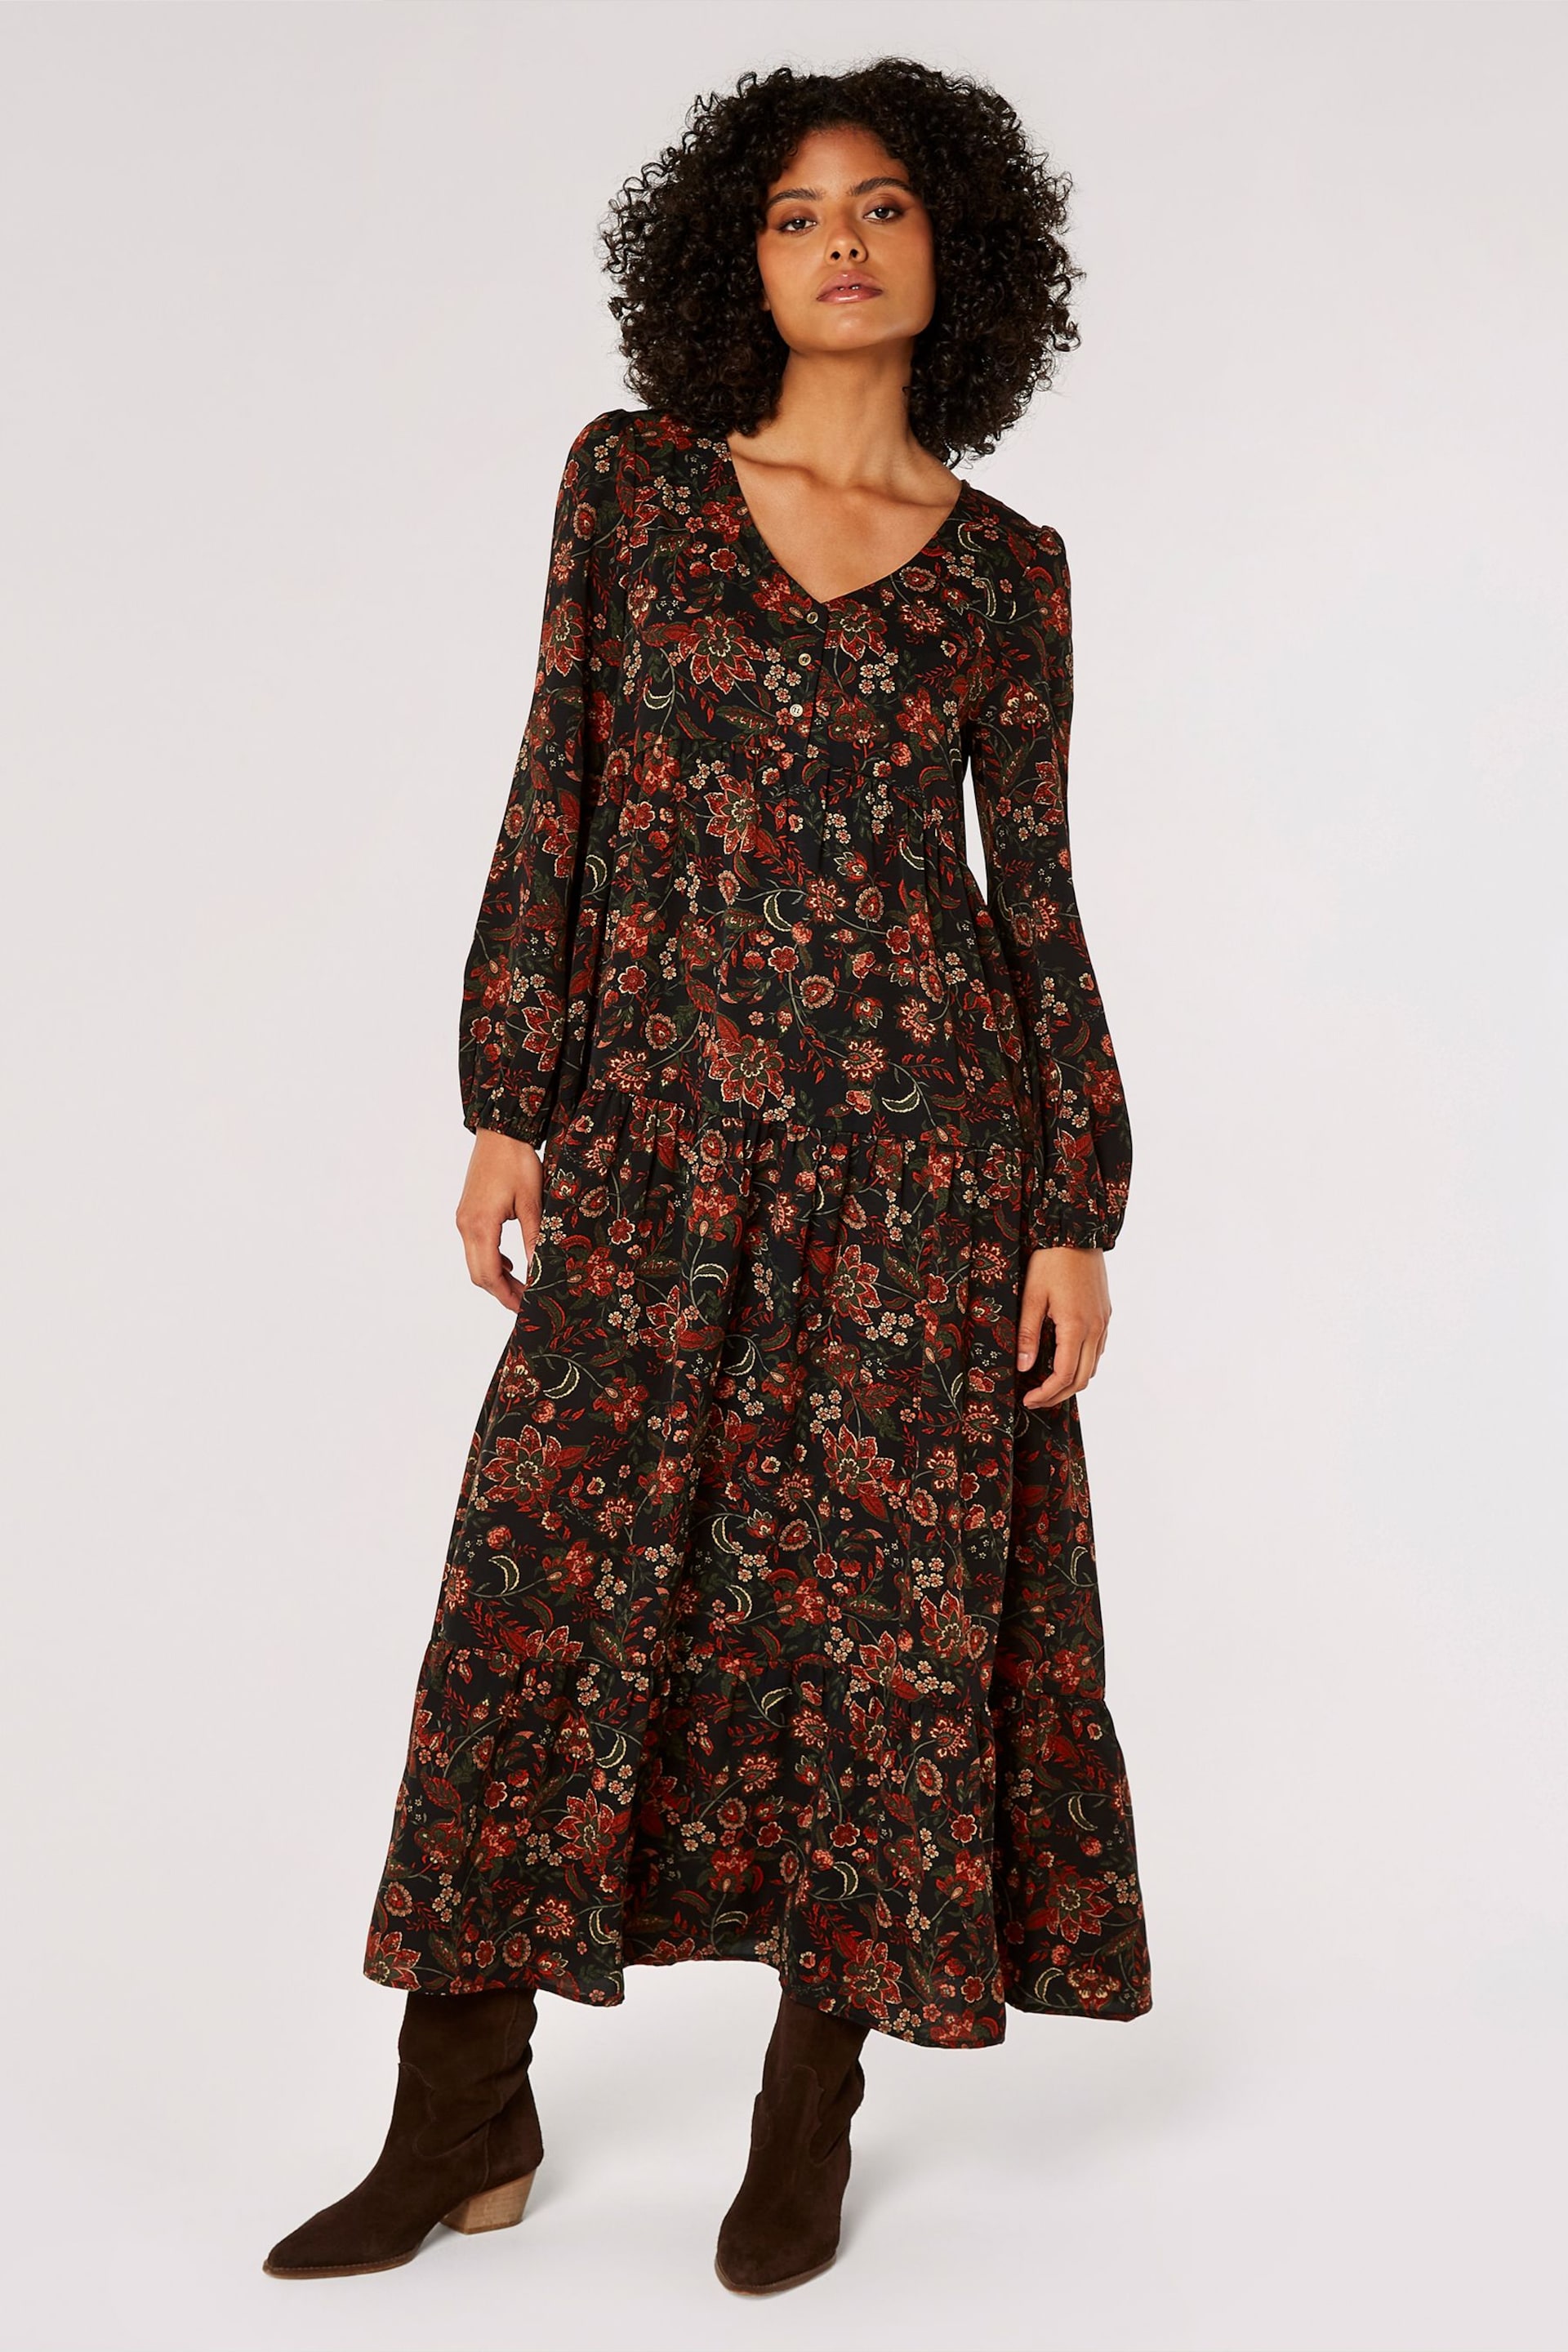 Apricot Black Floral Enchantment Maxi Dress - Image 1 of 5